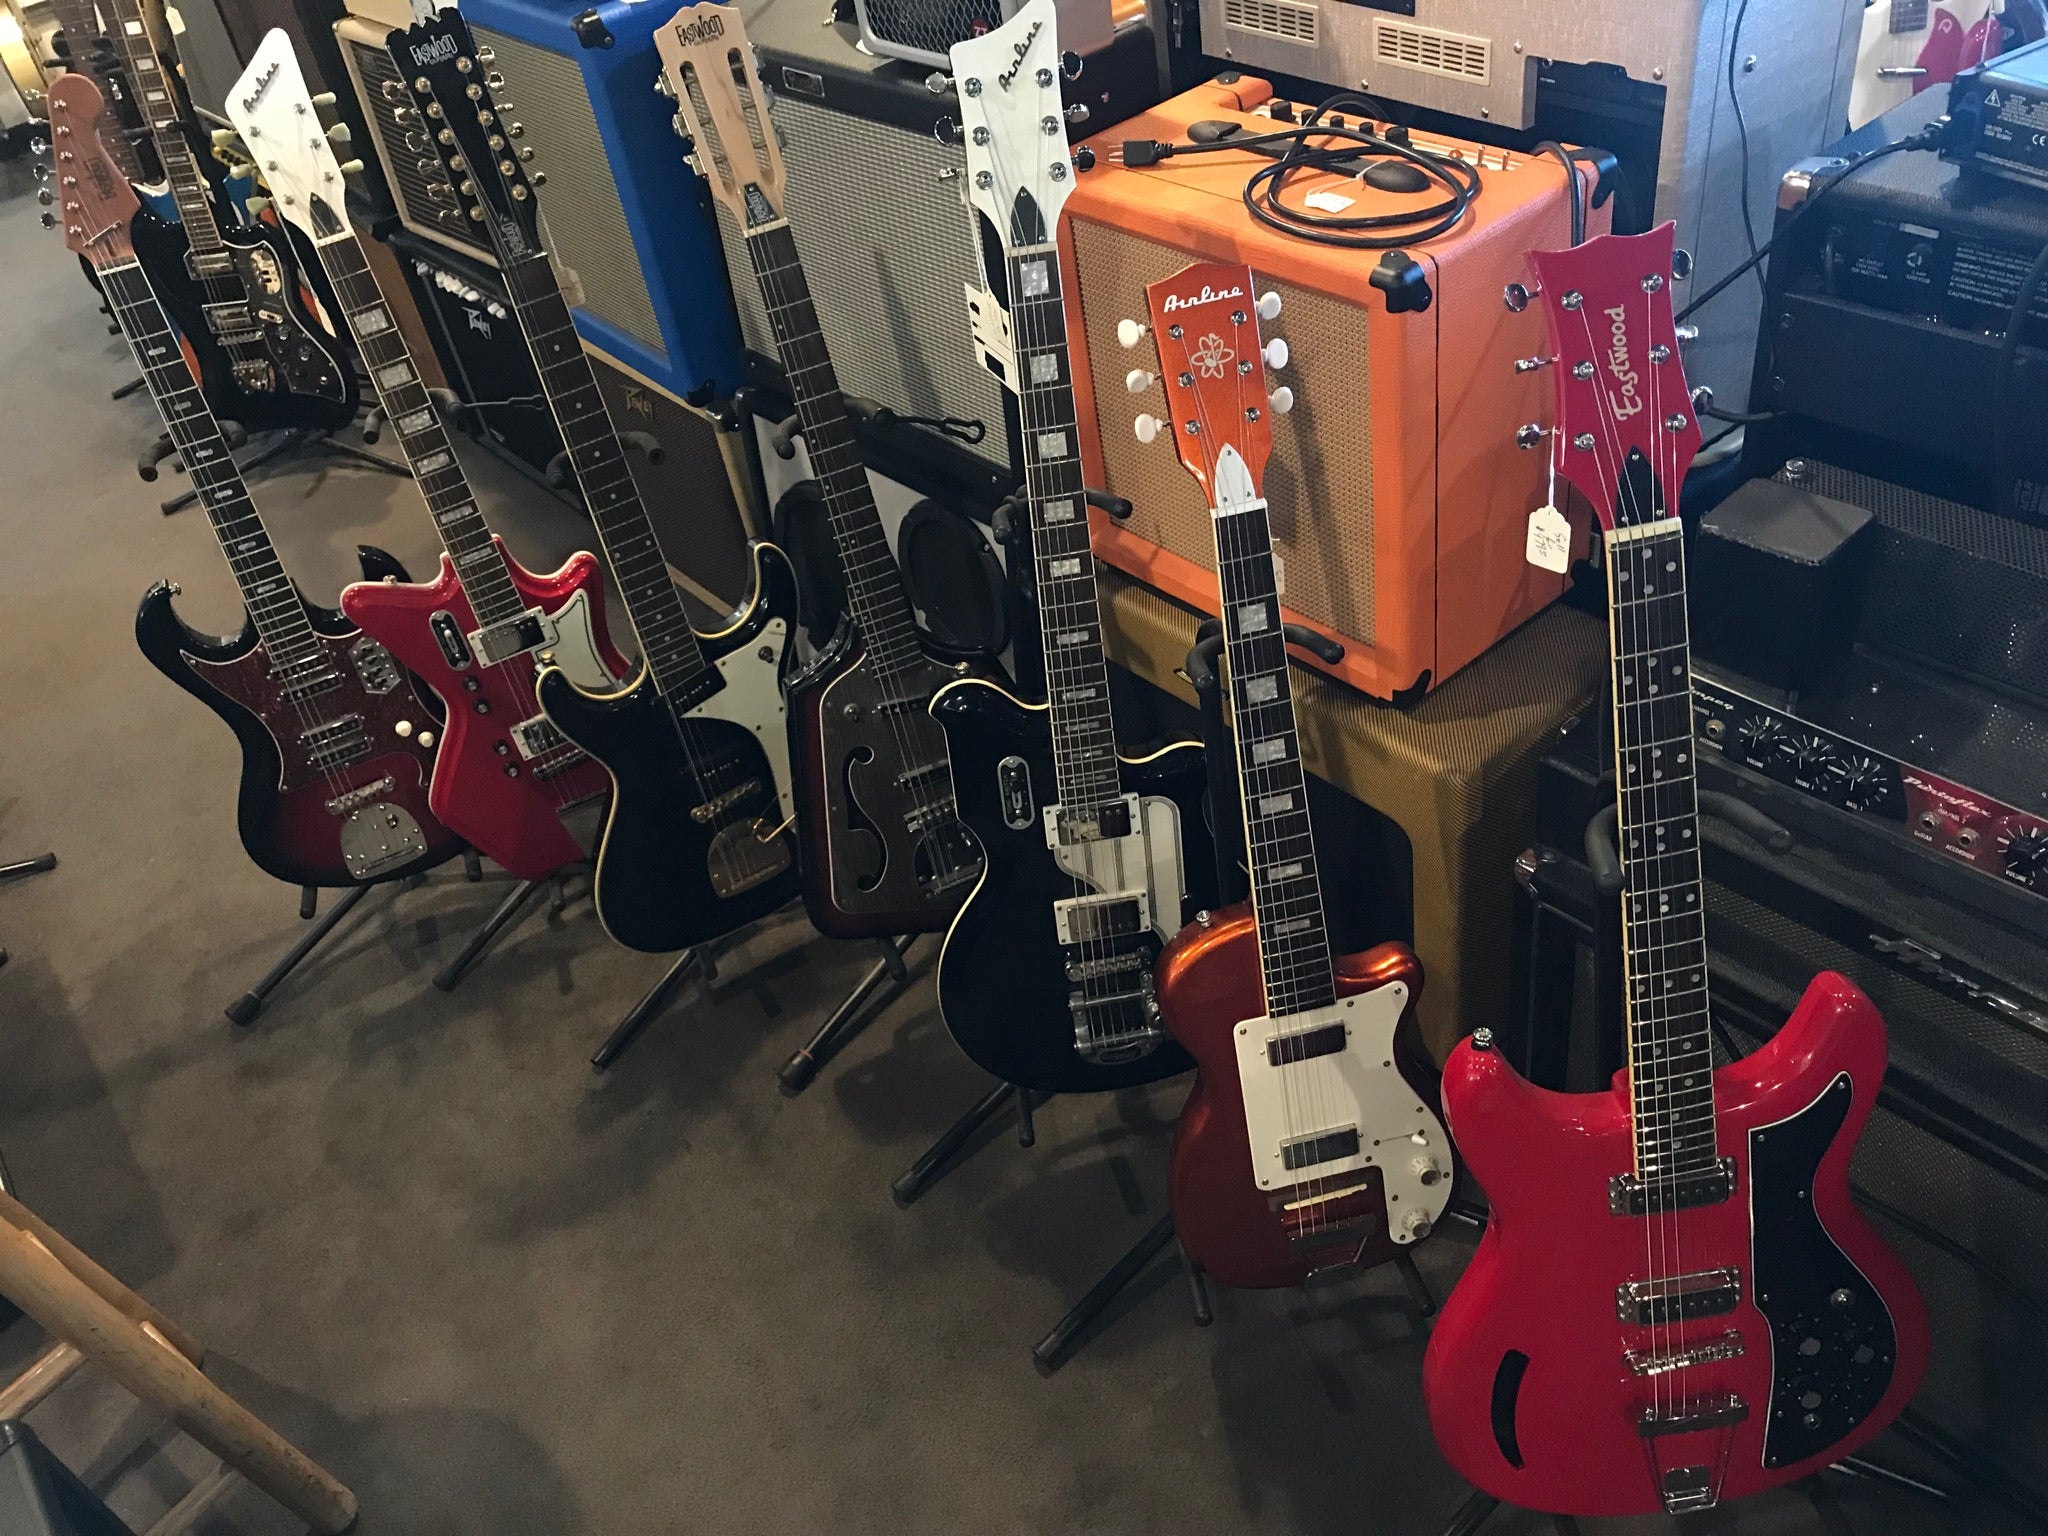 Eastwood guitars at South Austin Music